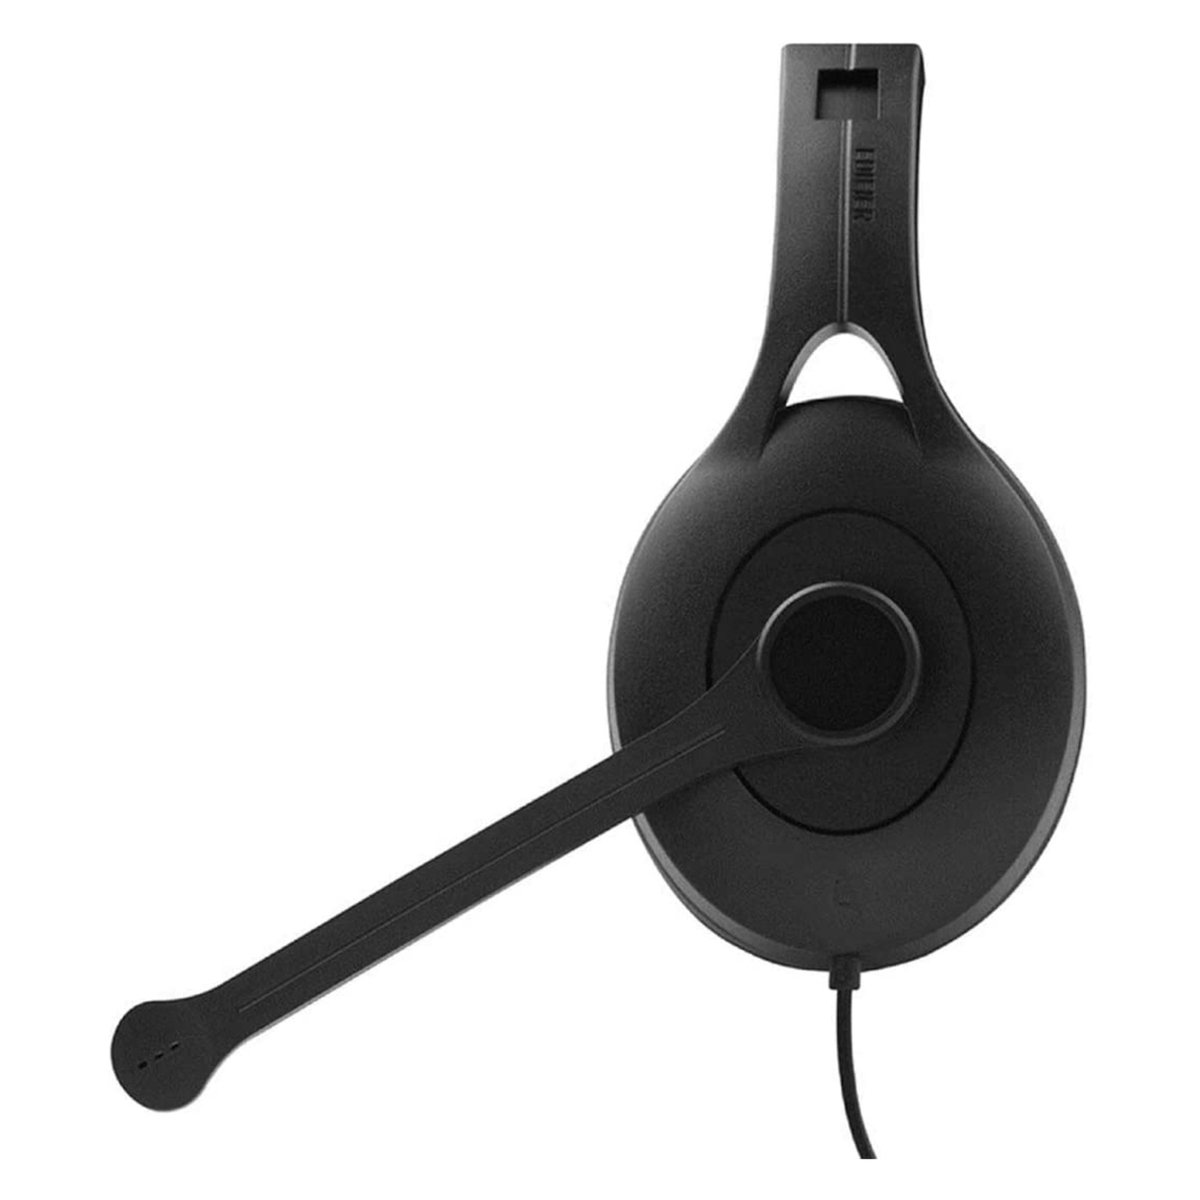 Edifier On-Ear Gaming Headset K800 Black